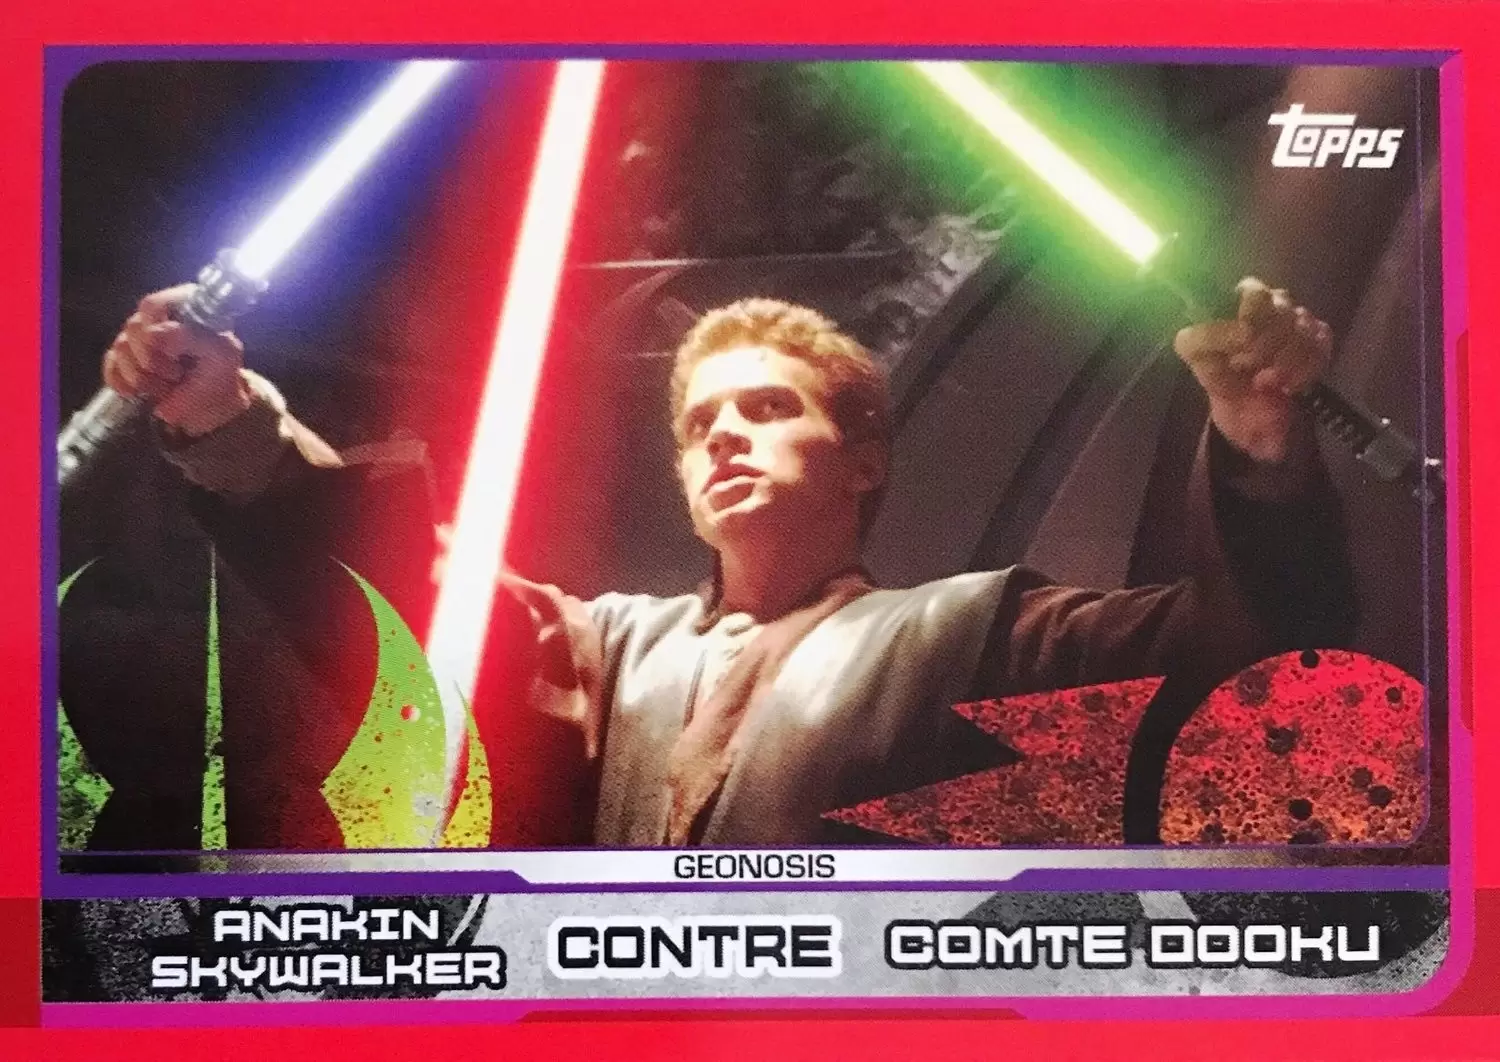 Topps - Voyage vers Star wars : Les Derniers Jedi - Anakin Skywalker contre Comte Dooku (Geonosis)